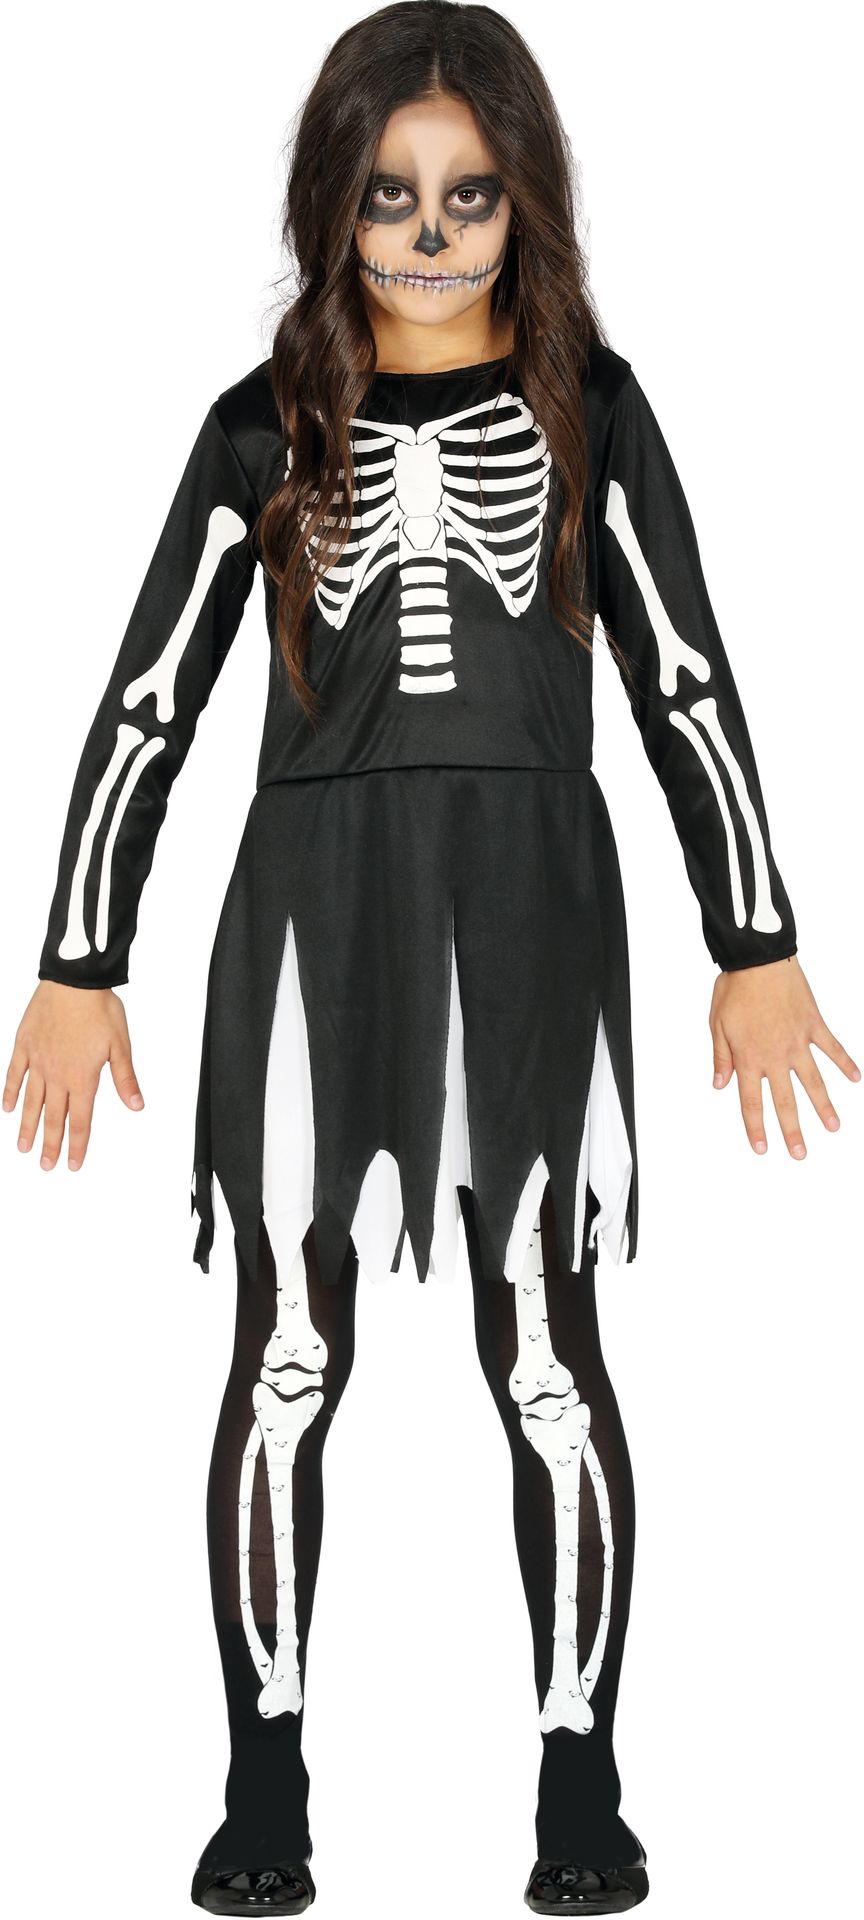 Halloween skeletten kostuum meisje